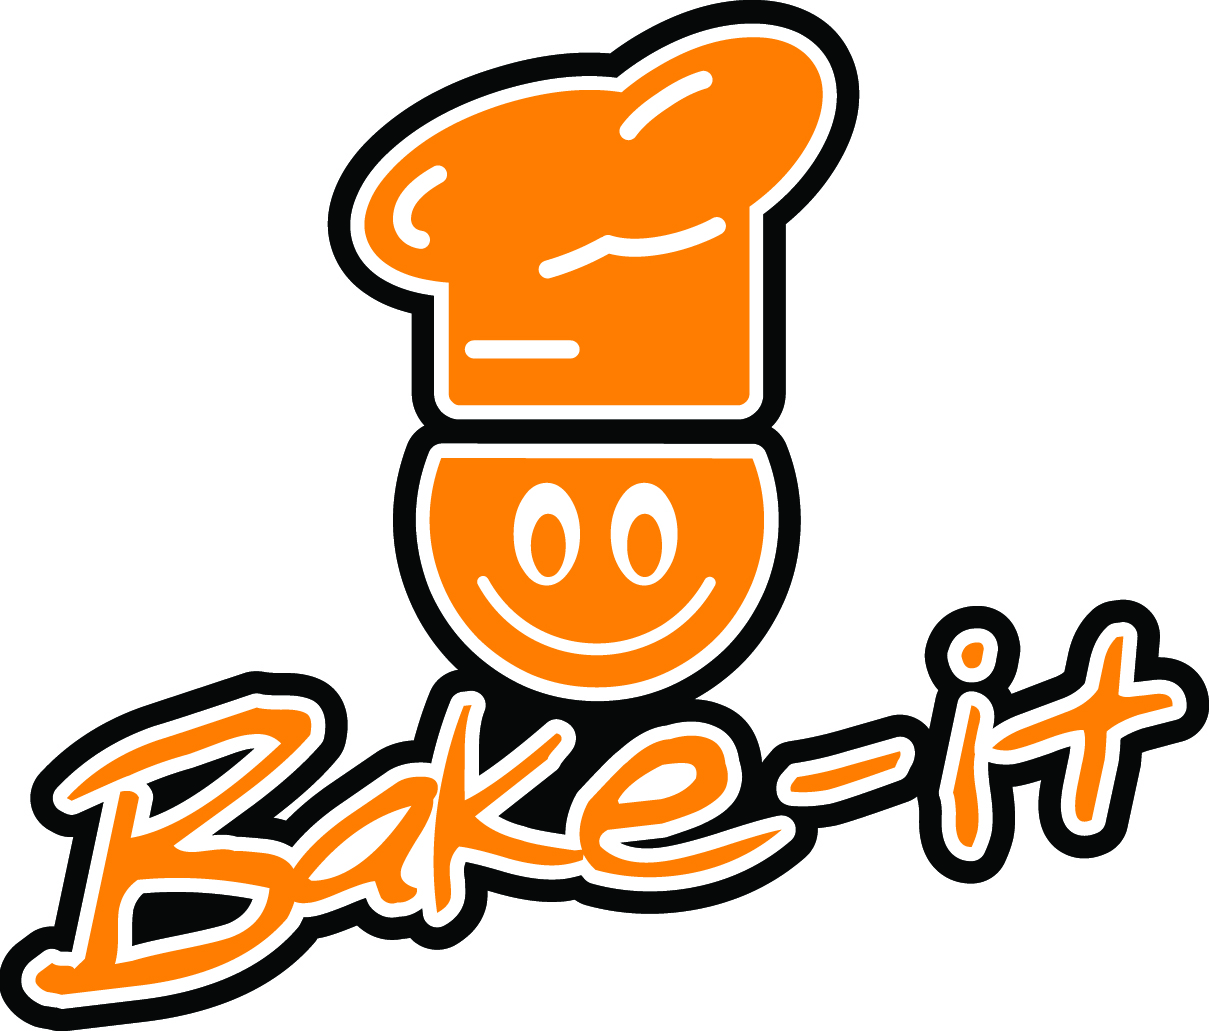 Bake-itLogofinal